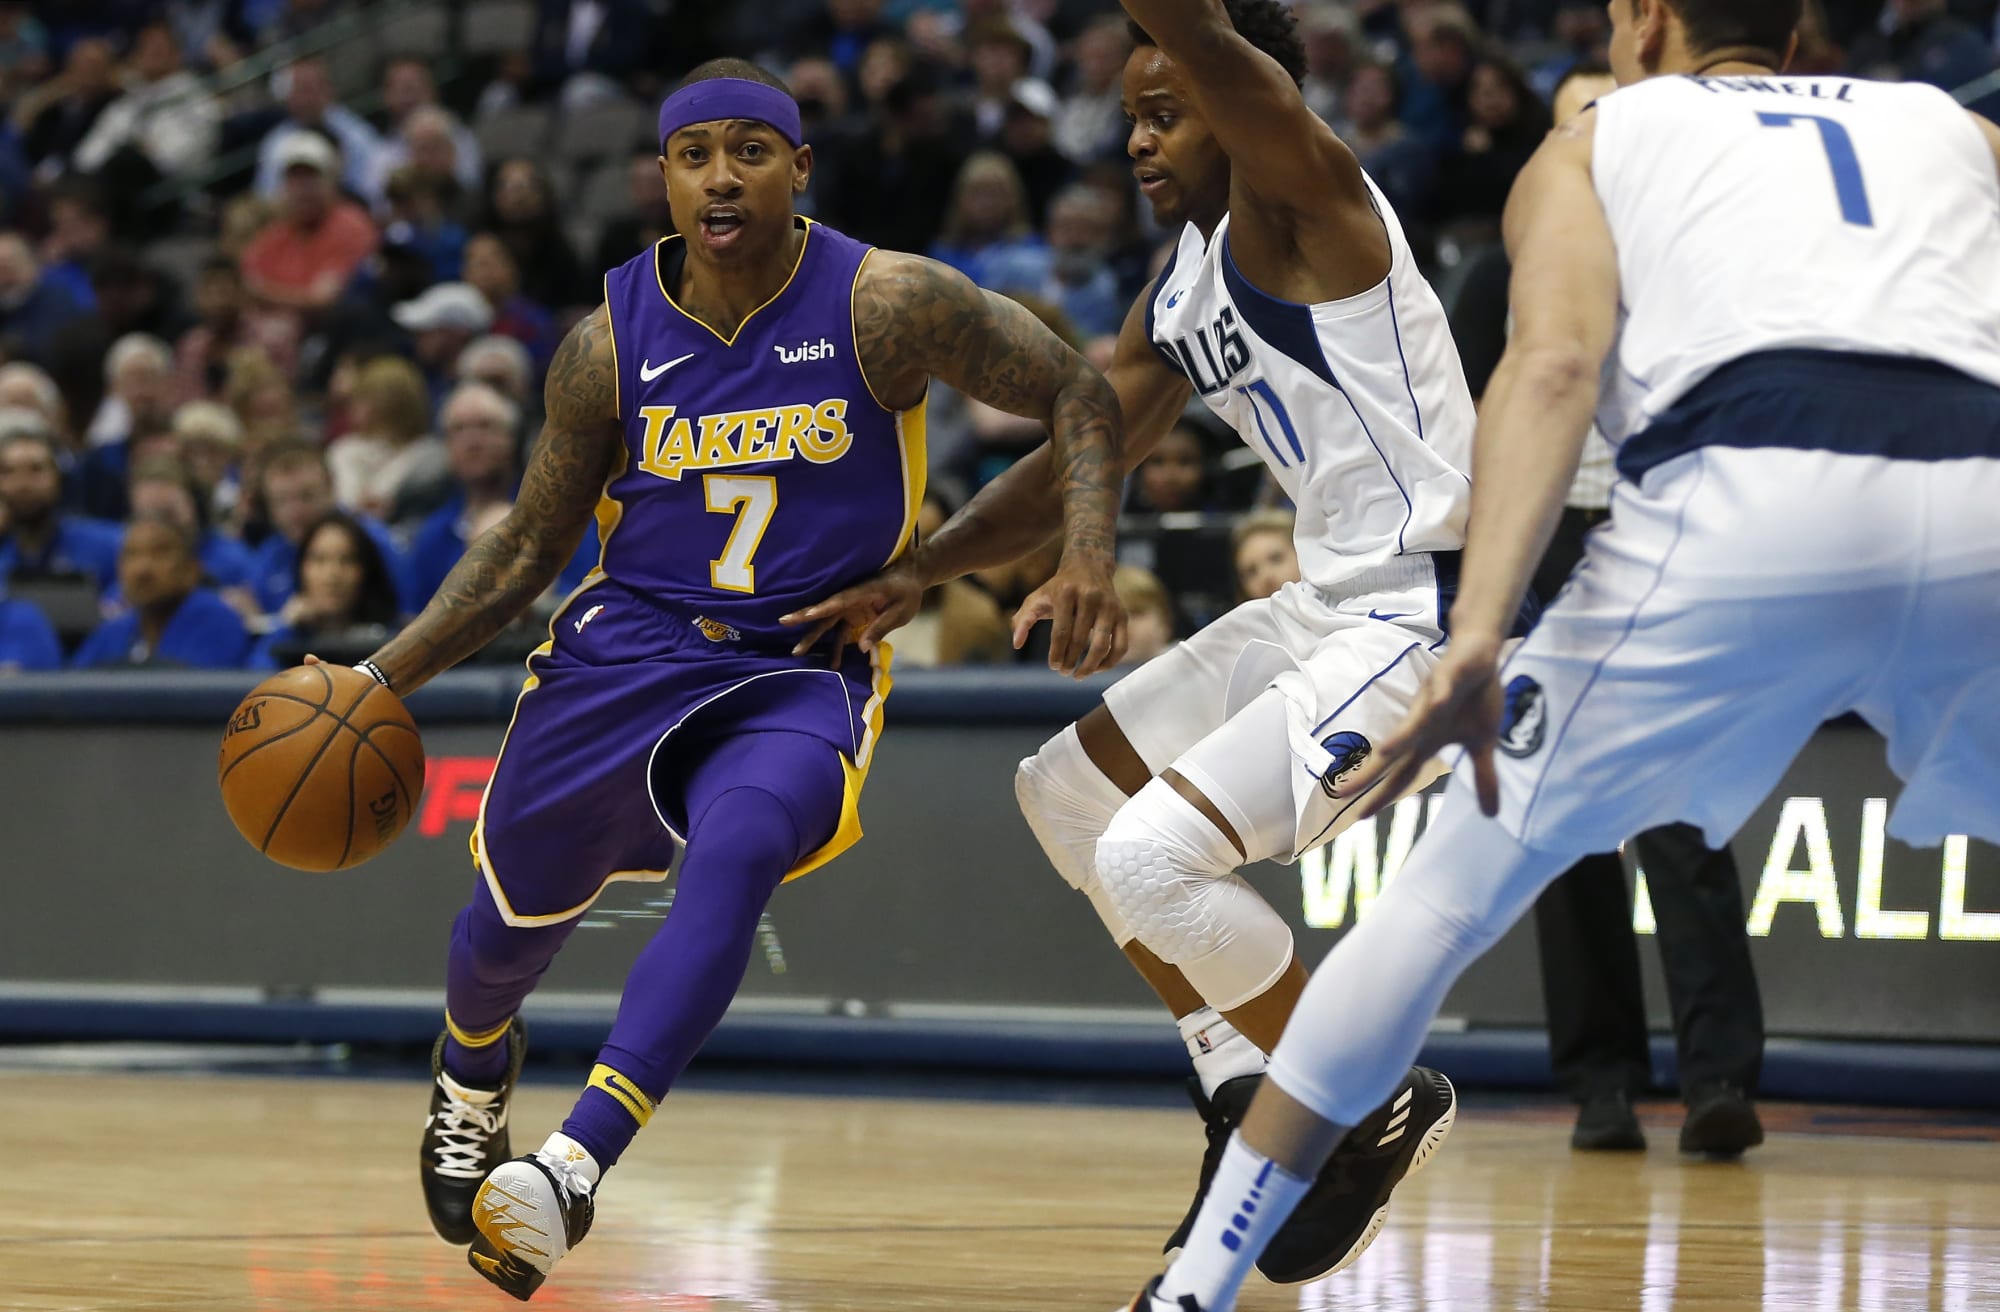 Los Angeles Lakers vs Dallas Mavericks recap and highlights